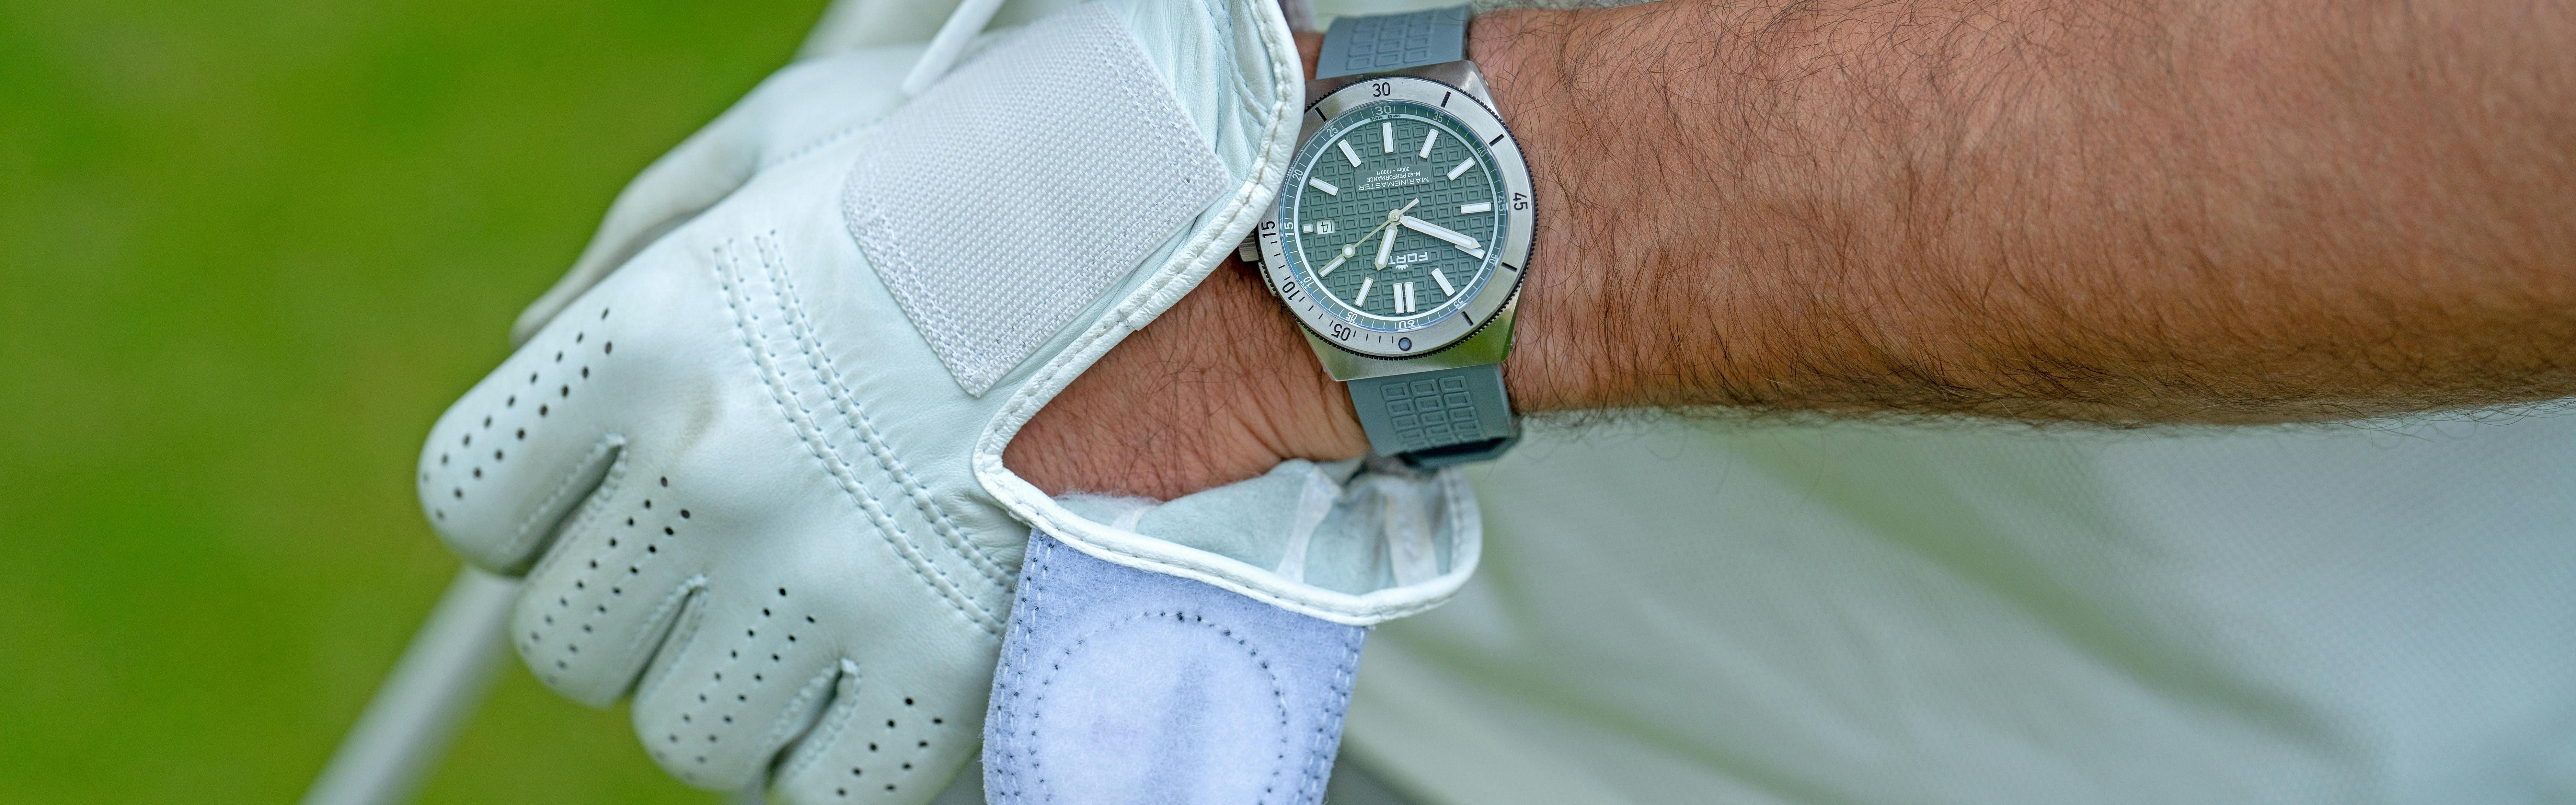 A man slides a golf glove onto his wrist, which already sports a grey watch.